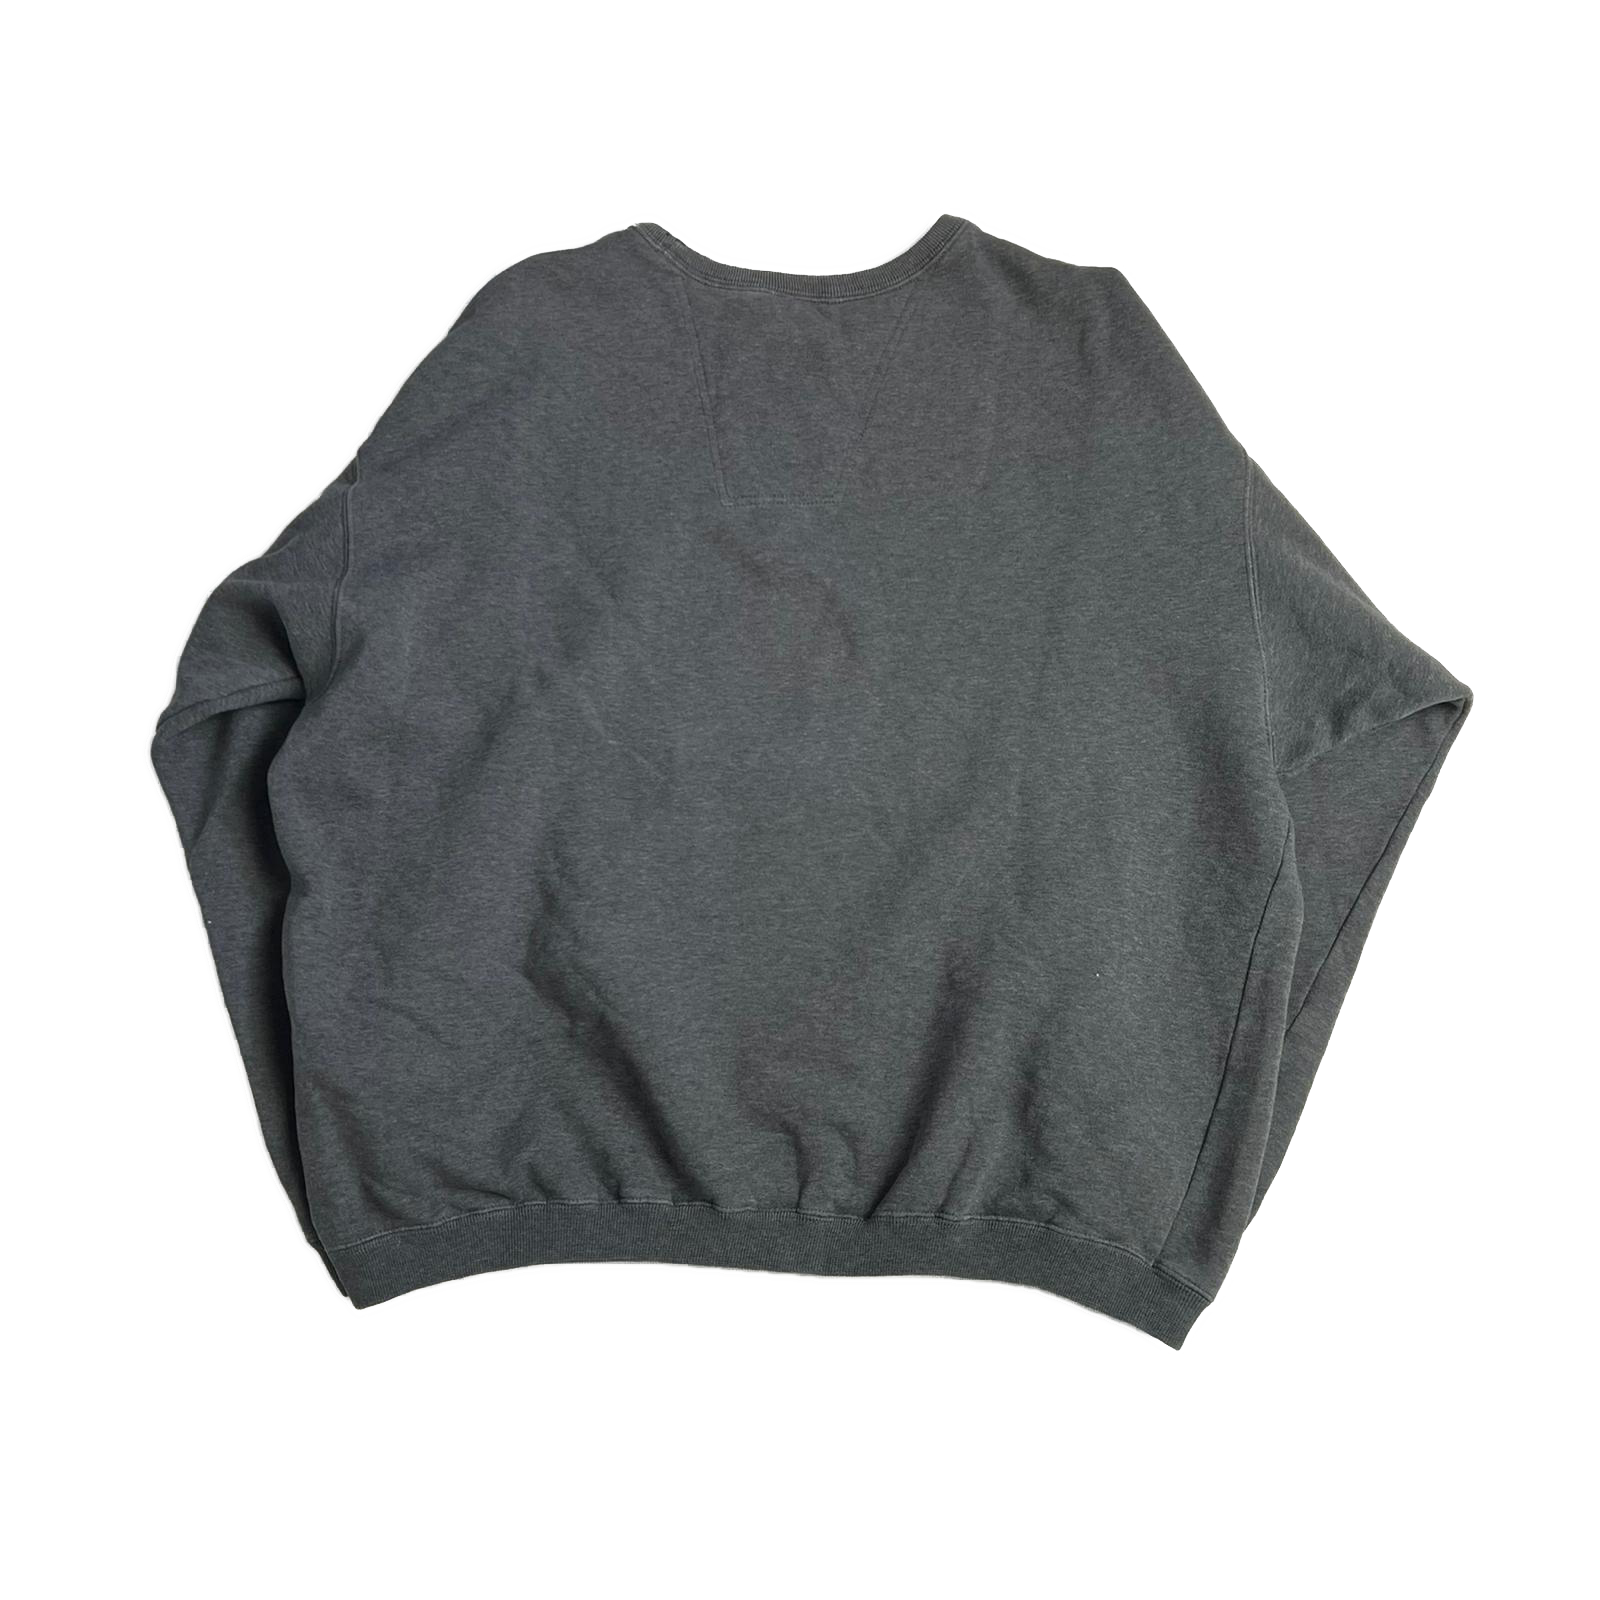 90's Adidas EQT sweatshirt